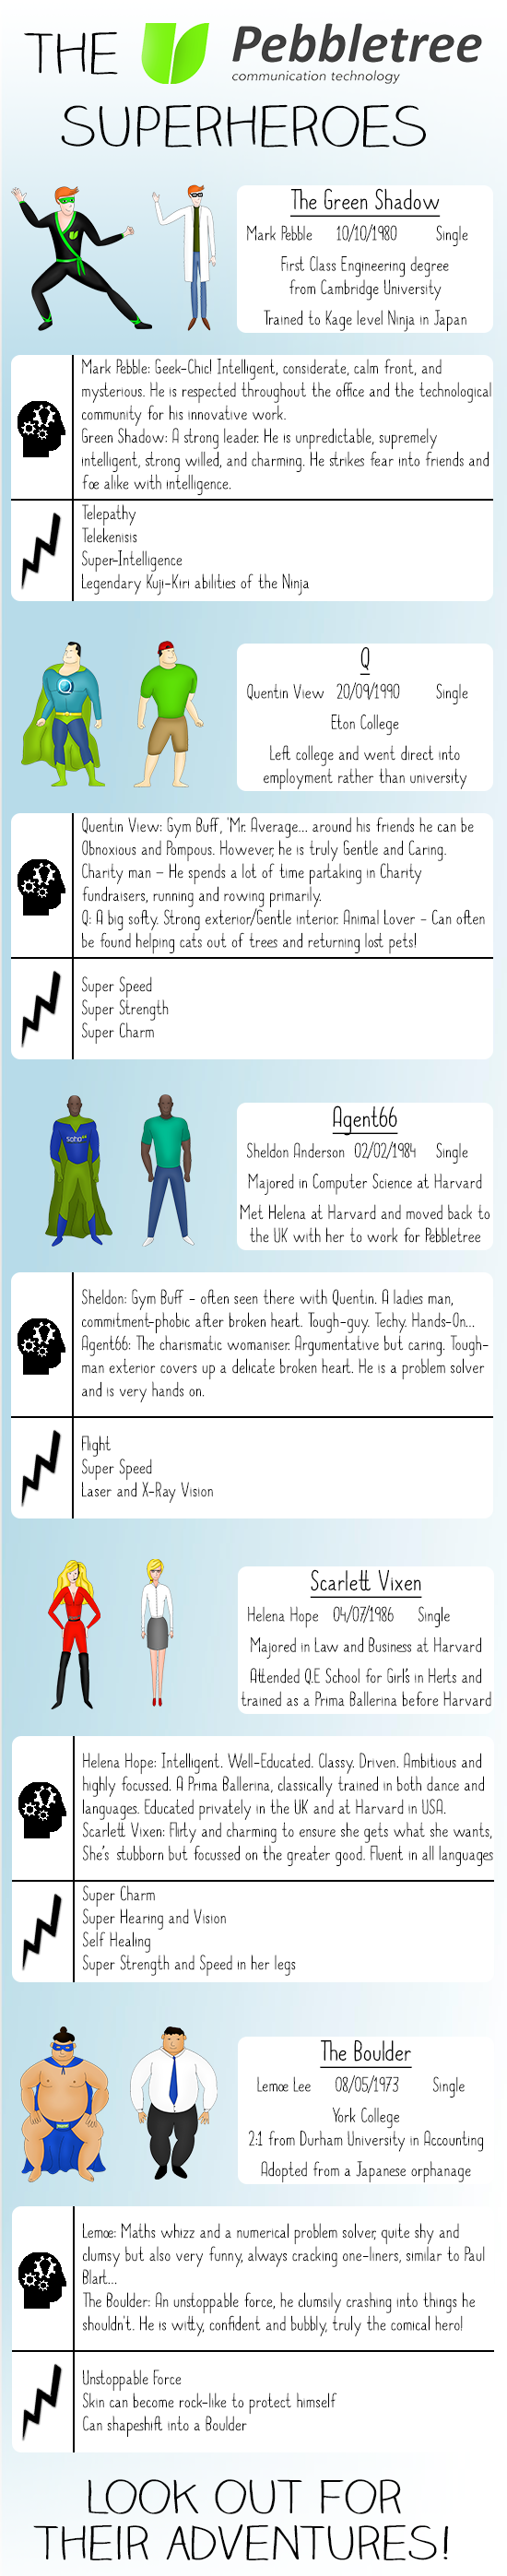 Pebbletree superheroes infographic